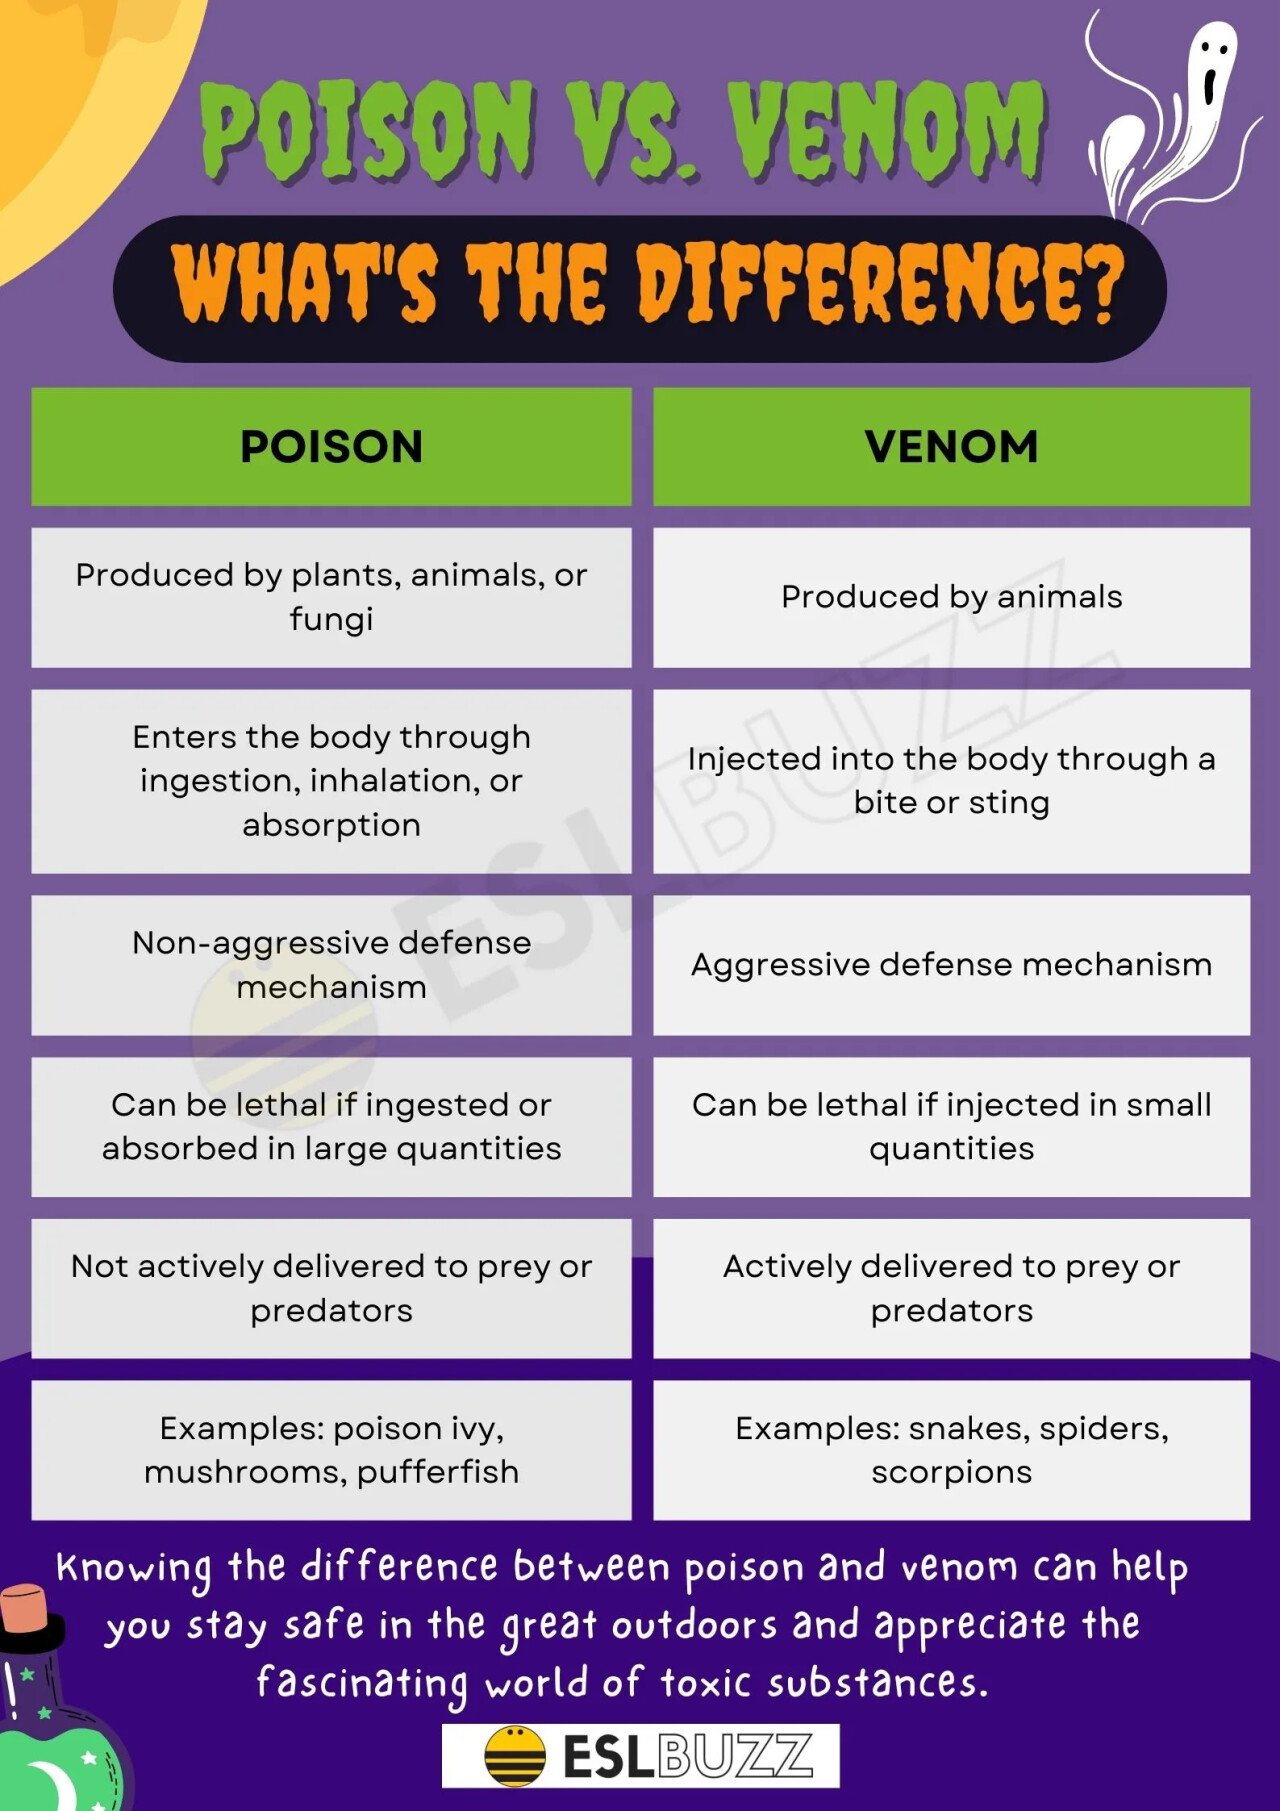 Poison_vs._Venom.jpg.webp.ren.jpg 쉽게 보는 독의 세가지 종류와 차이